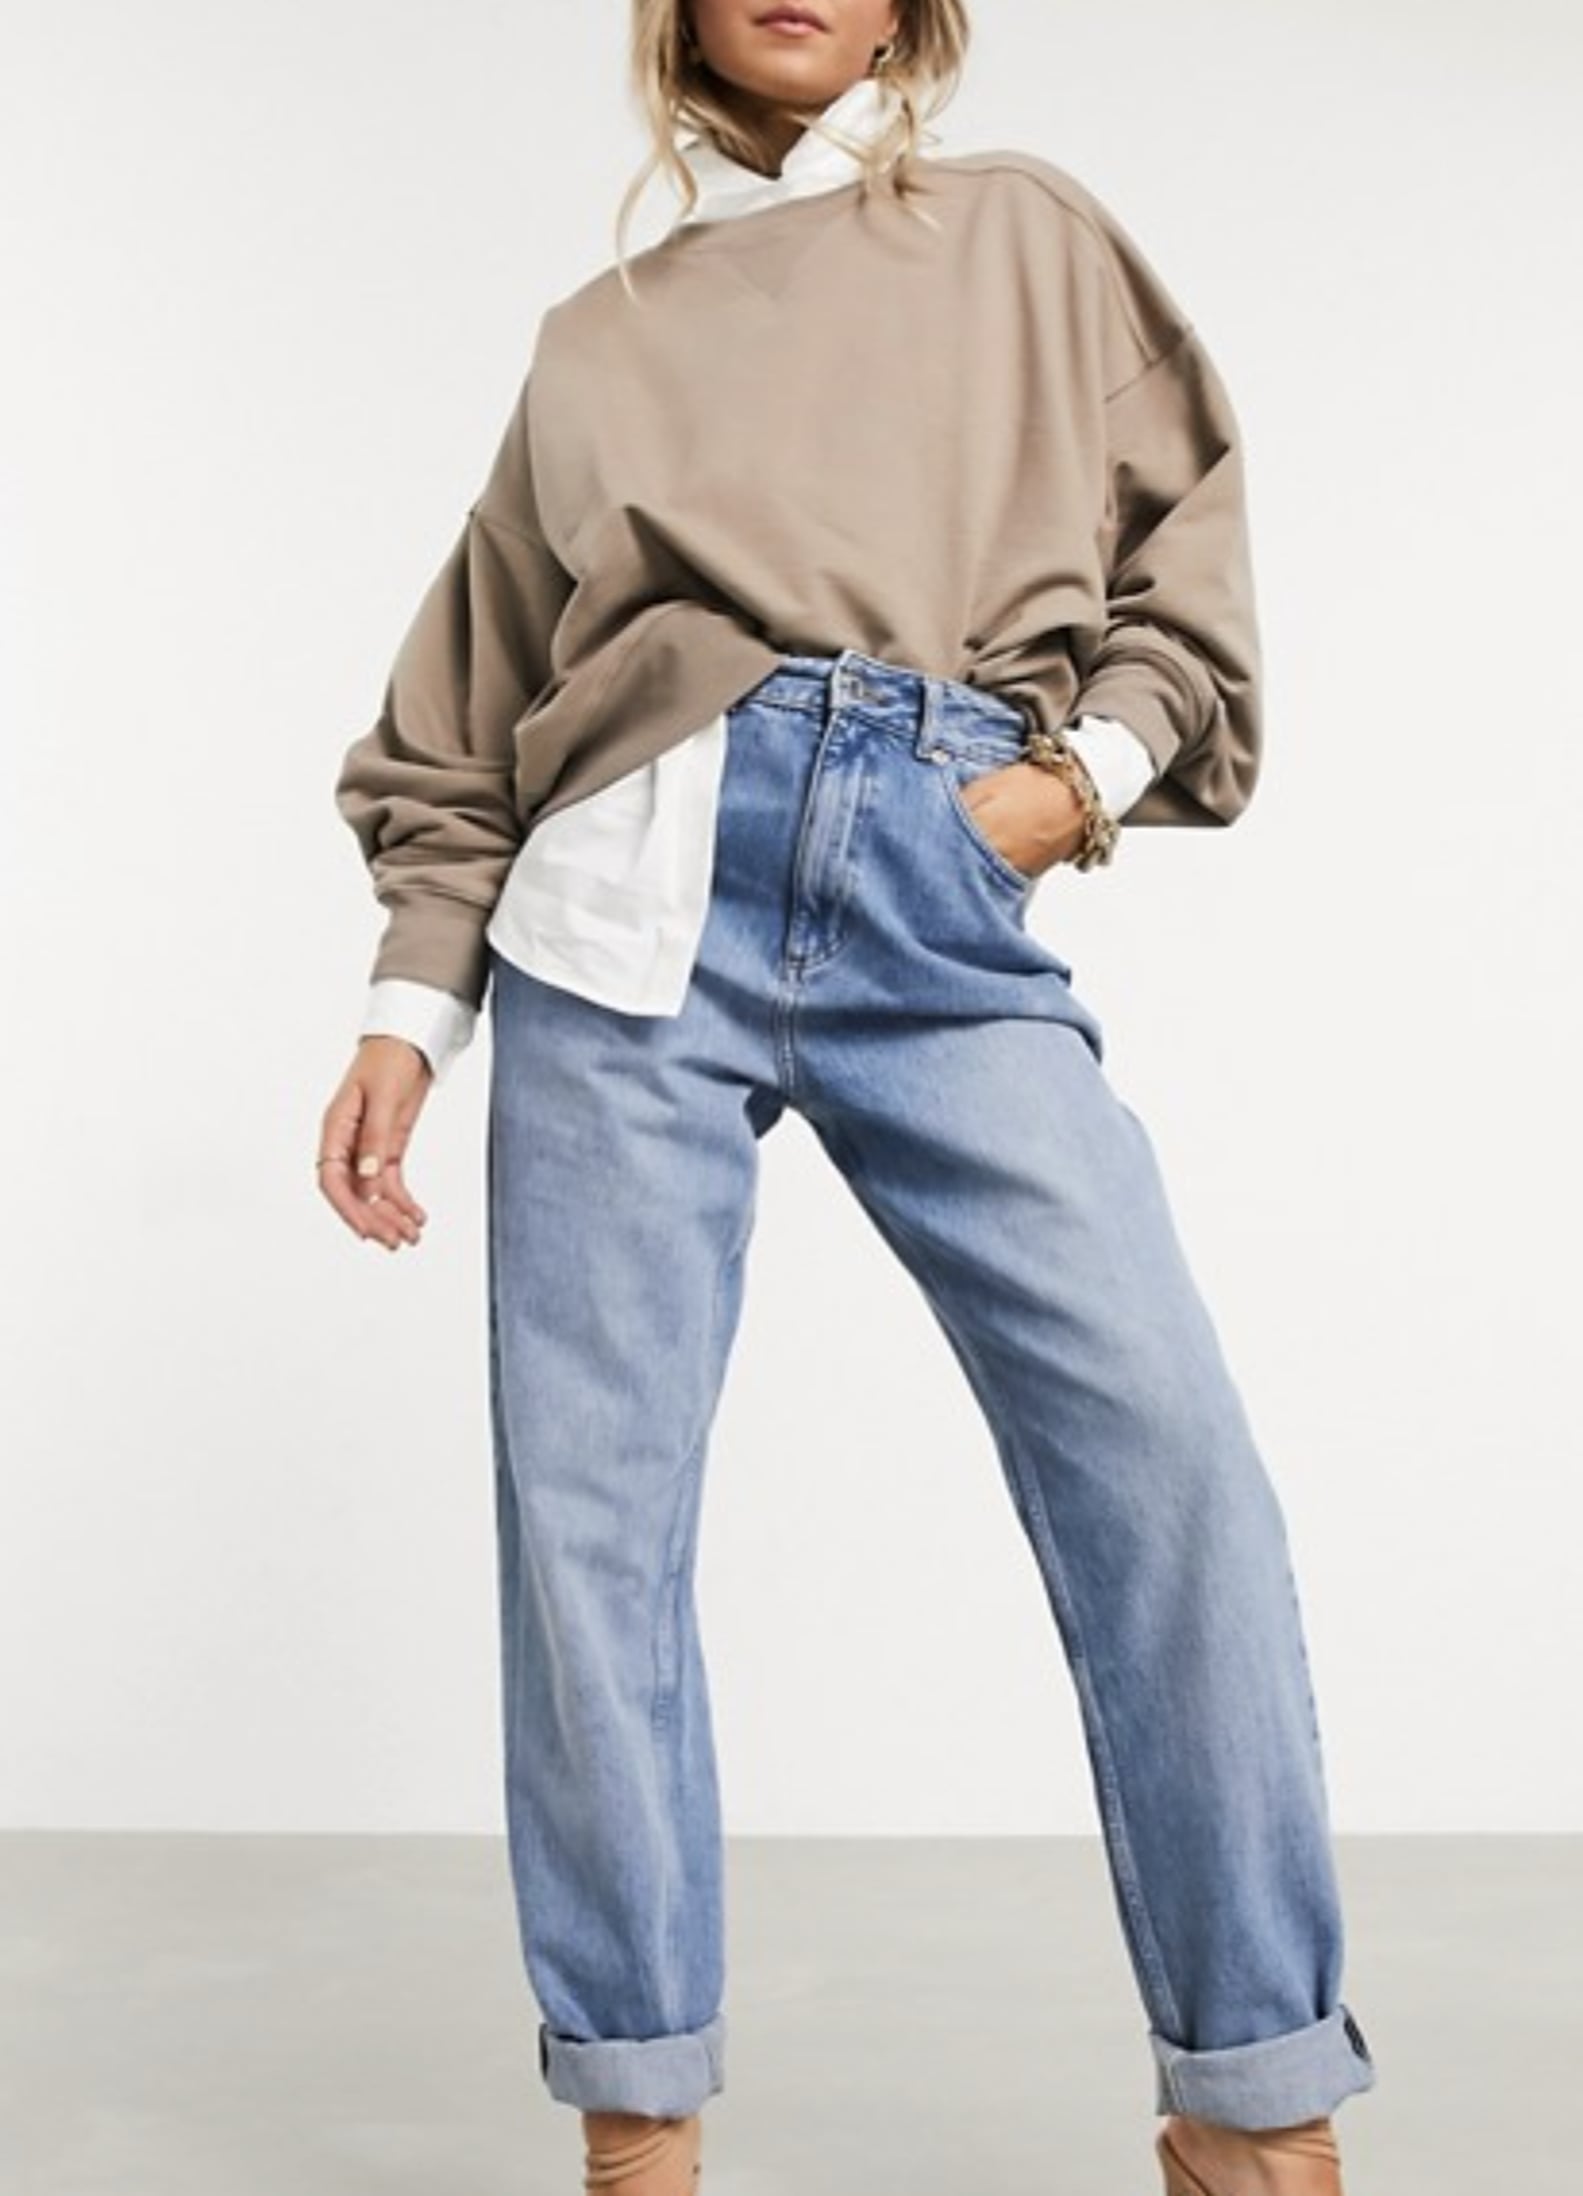 Best Baggy Jeans For Women | POPSUGAR Fashion